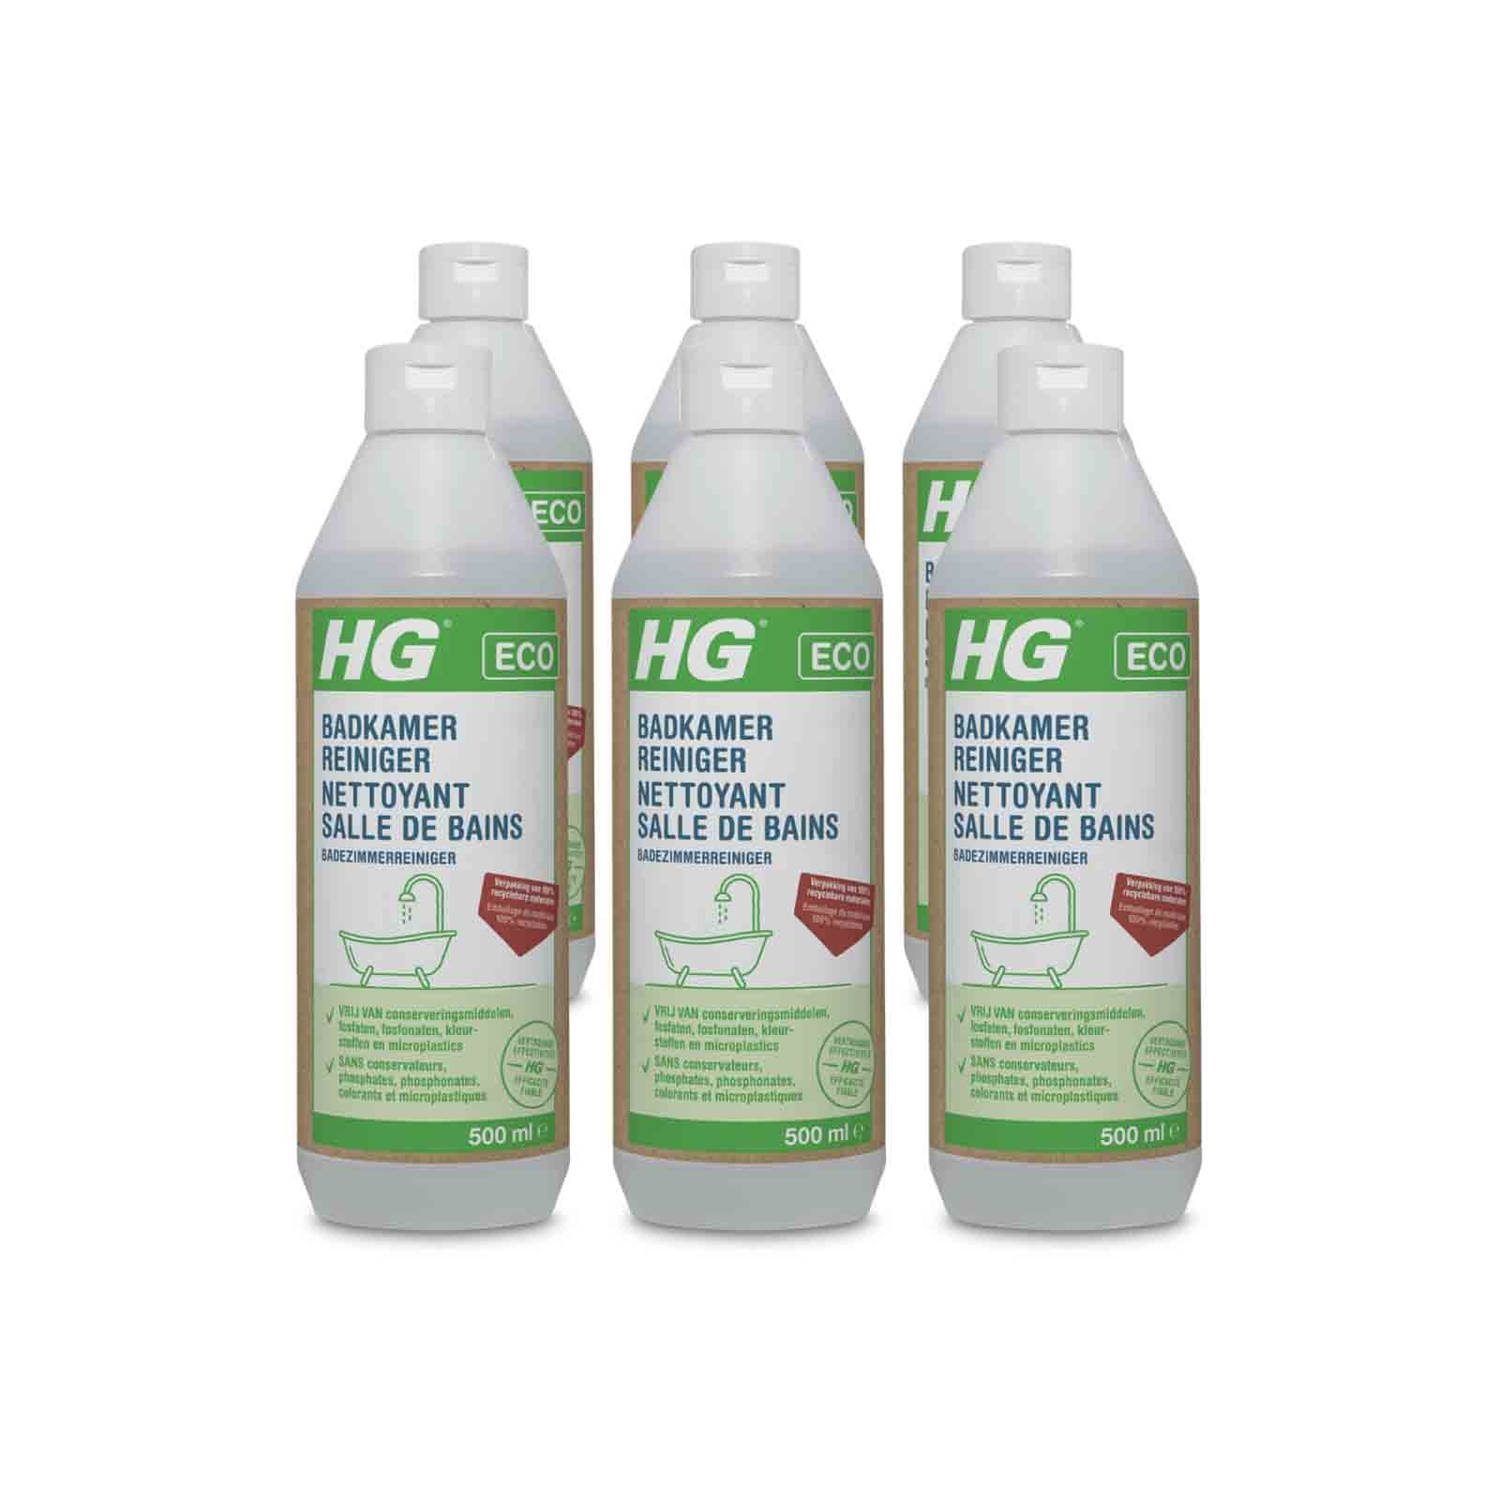 HG ECO badkamerreiniger 500 ml - 6 stuks